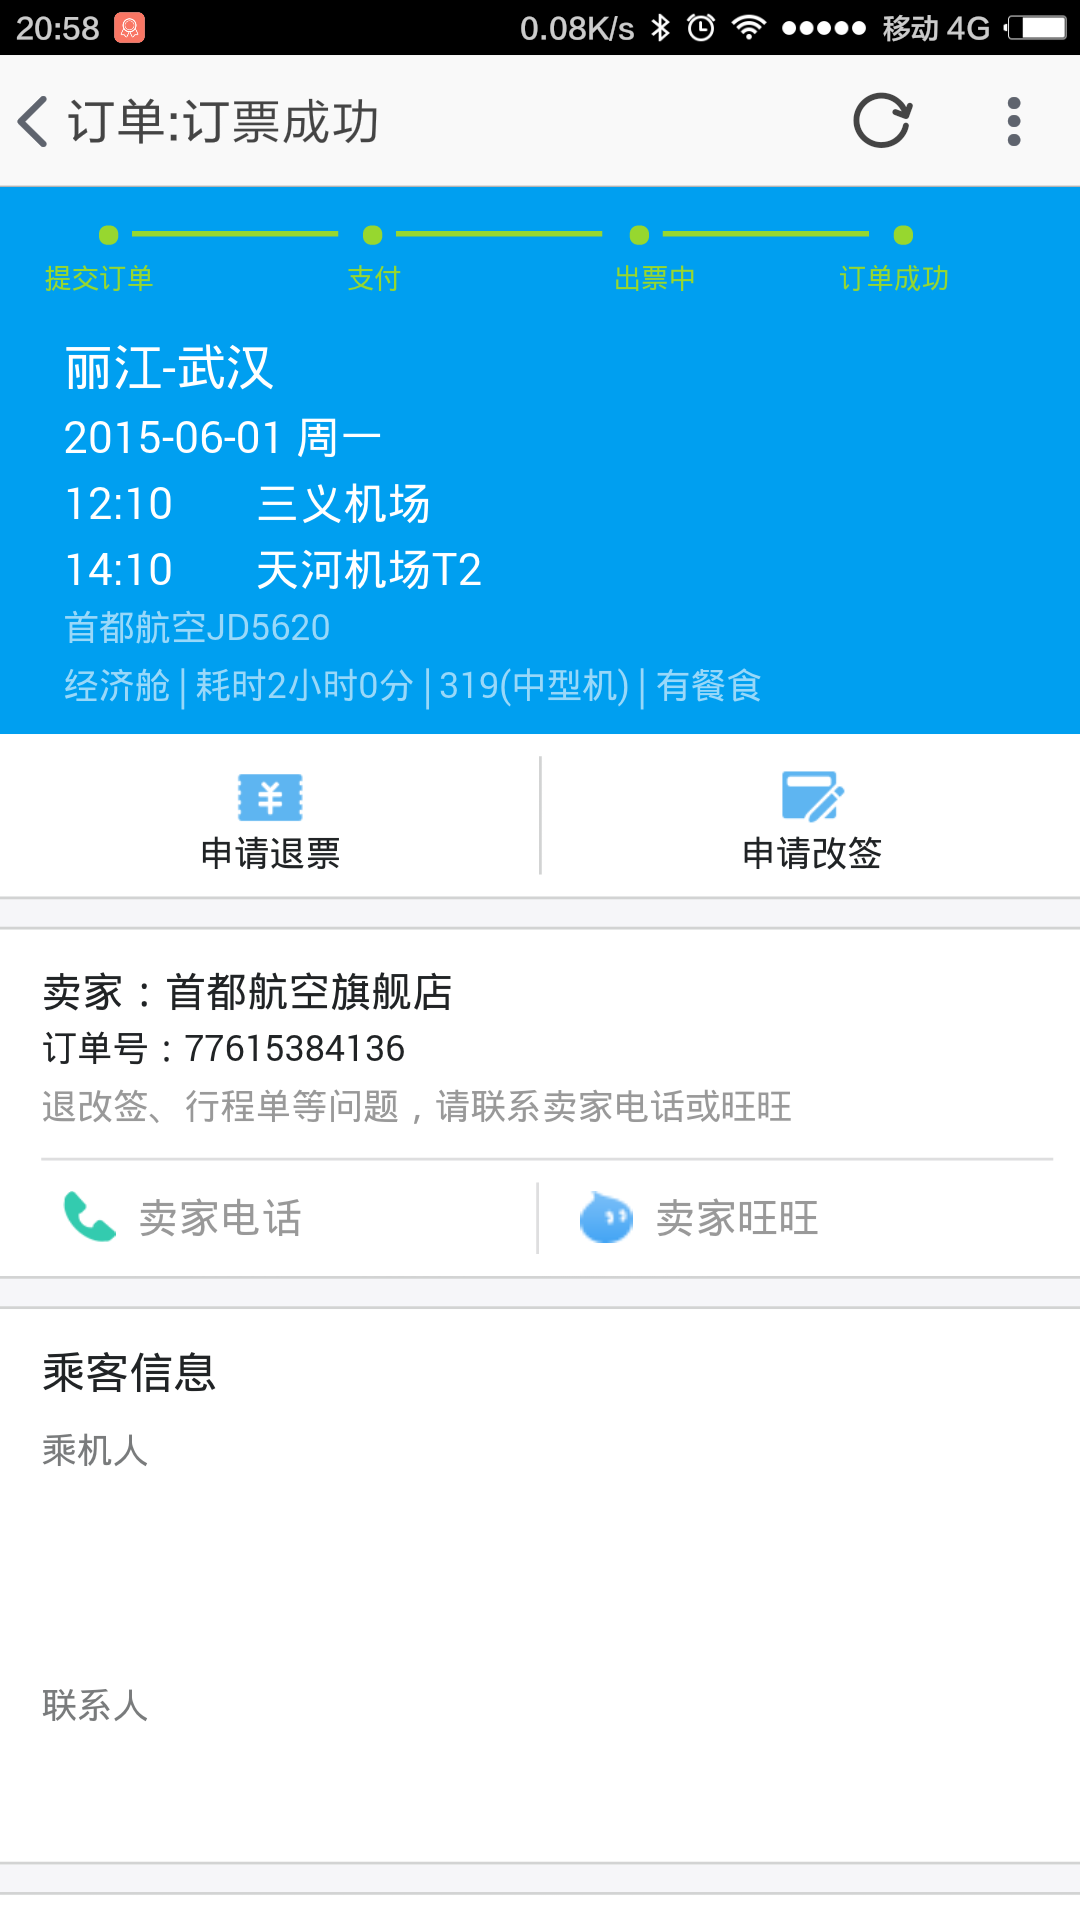 Screenshot_2015-11-09-20-58-21_com.taobao.taobao.png